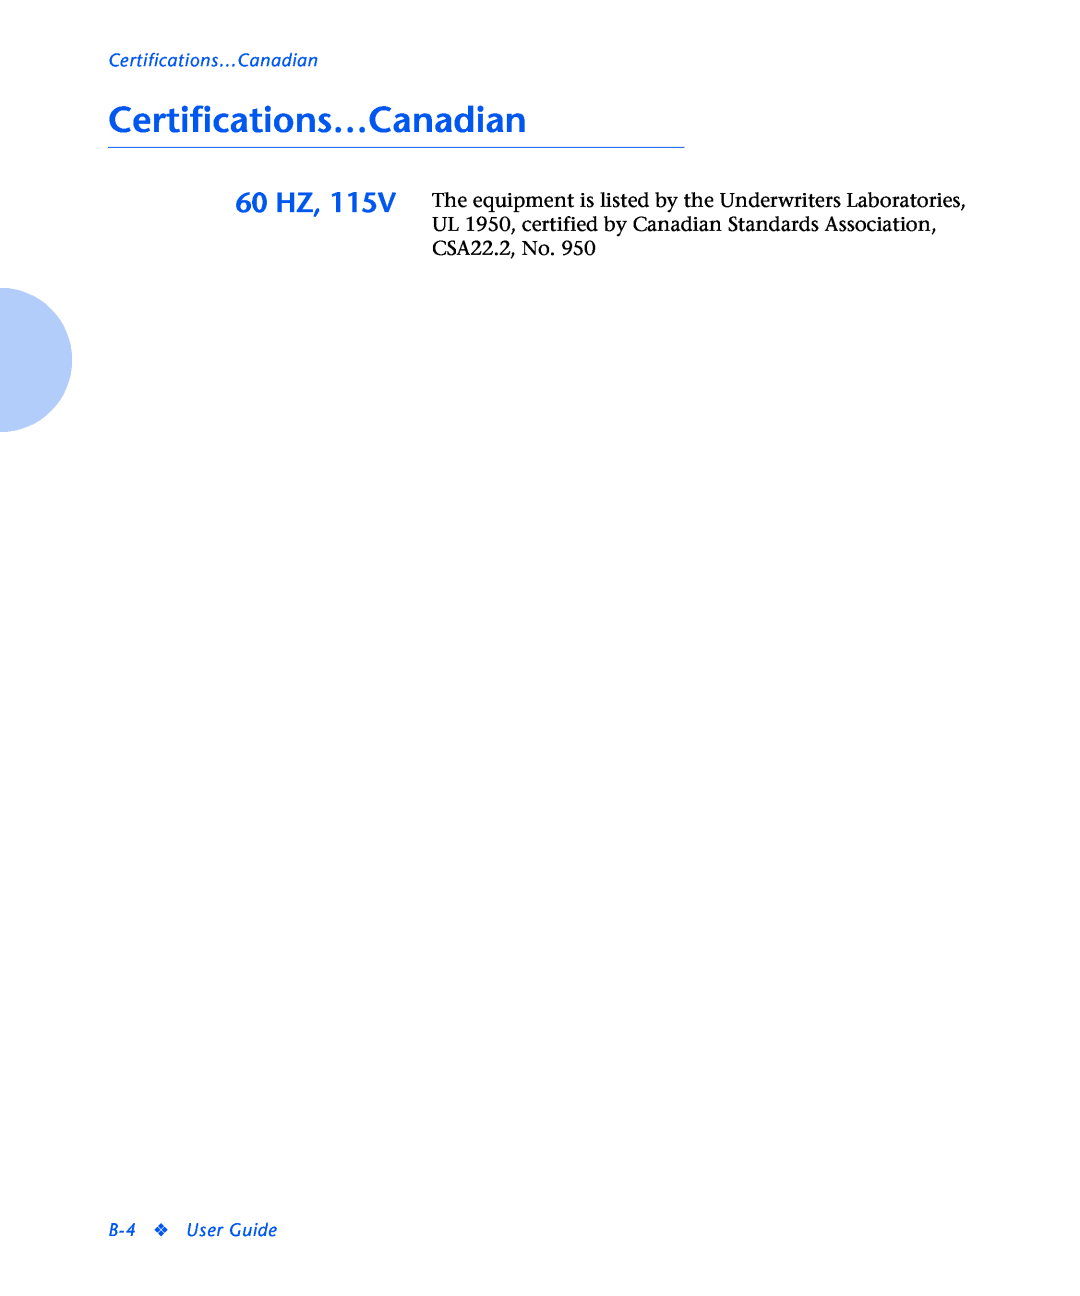 Xerox N2125 manual Certifications…Canadian, B-4 User Guide 